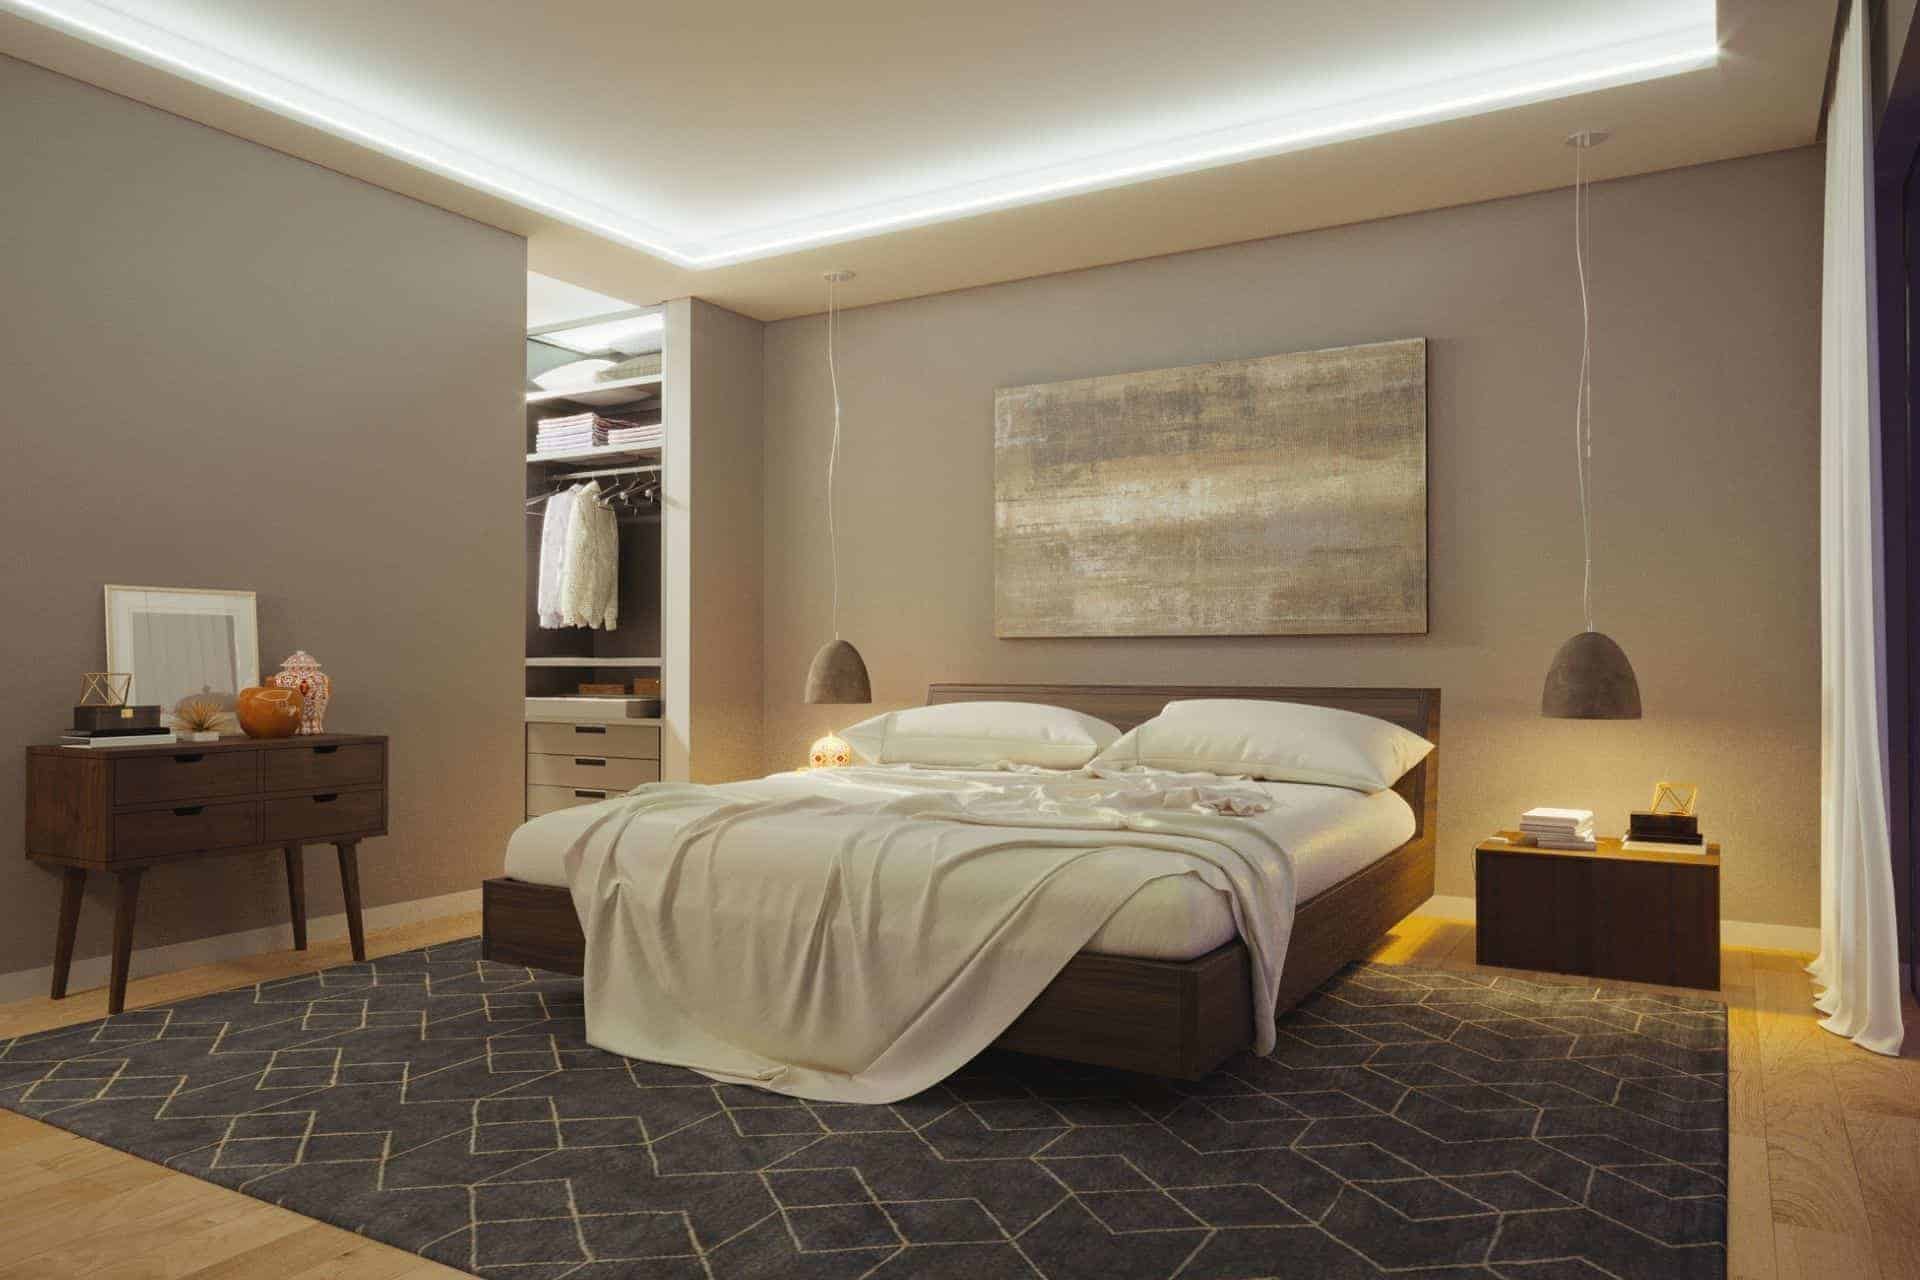 Modern row house bedroom interior design